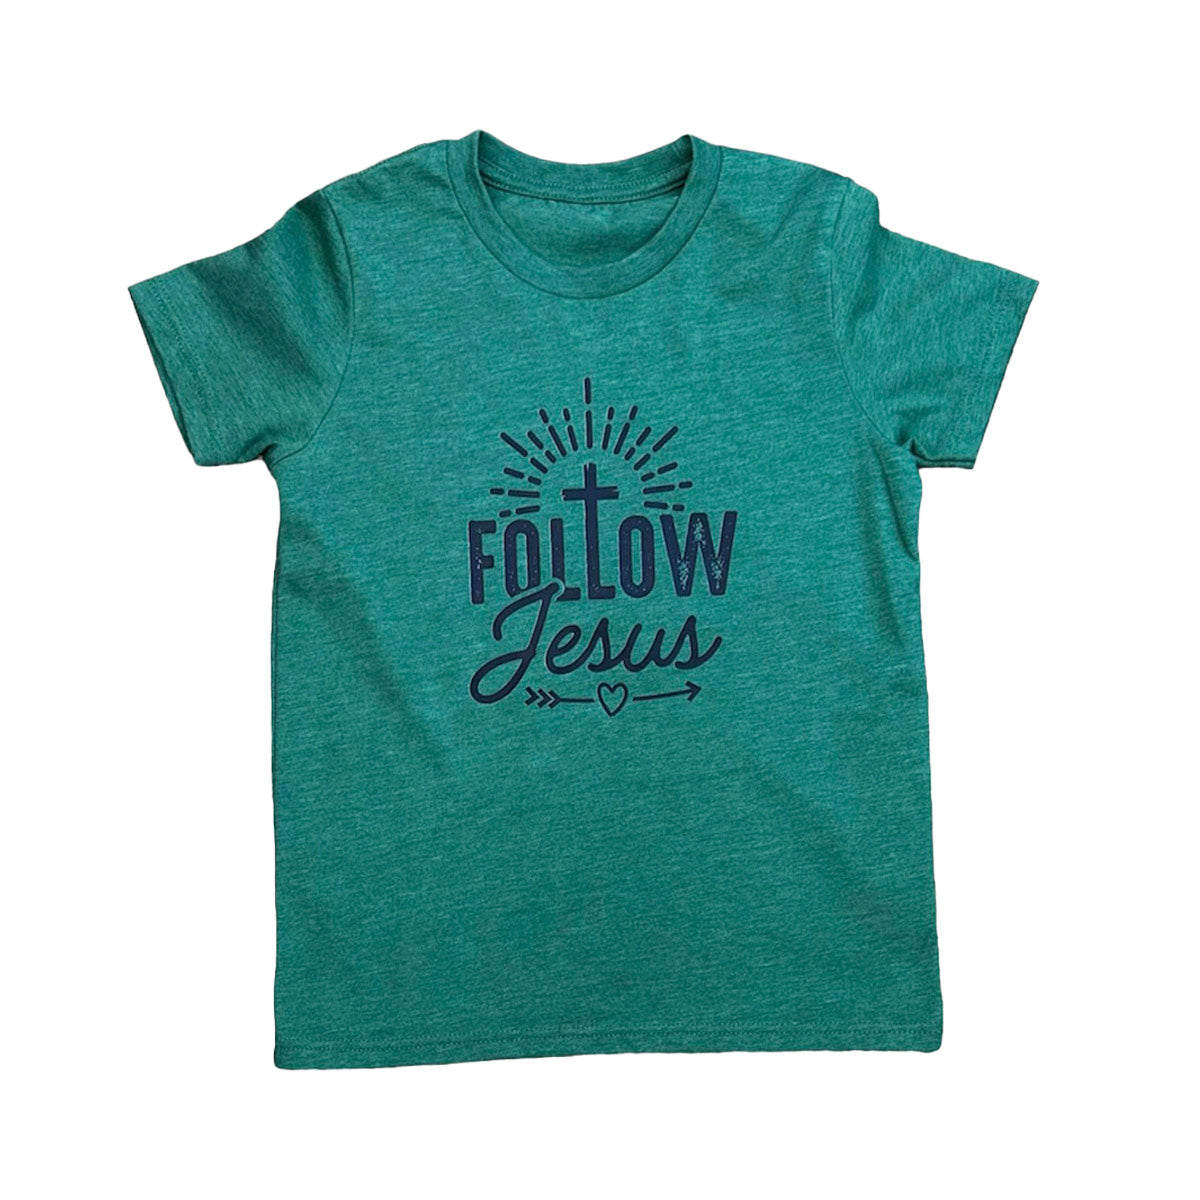 Follow Jesus - T-Shirt